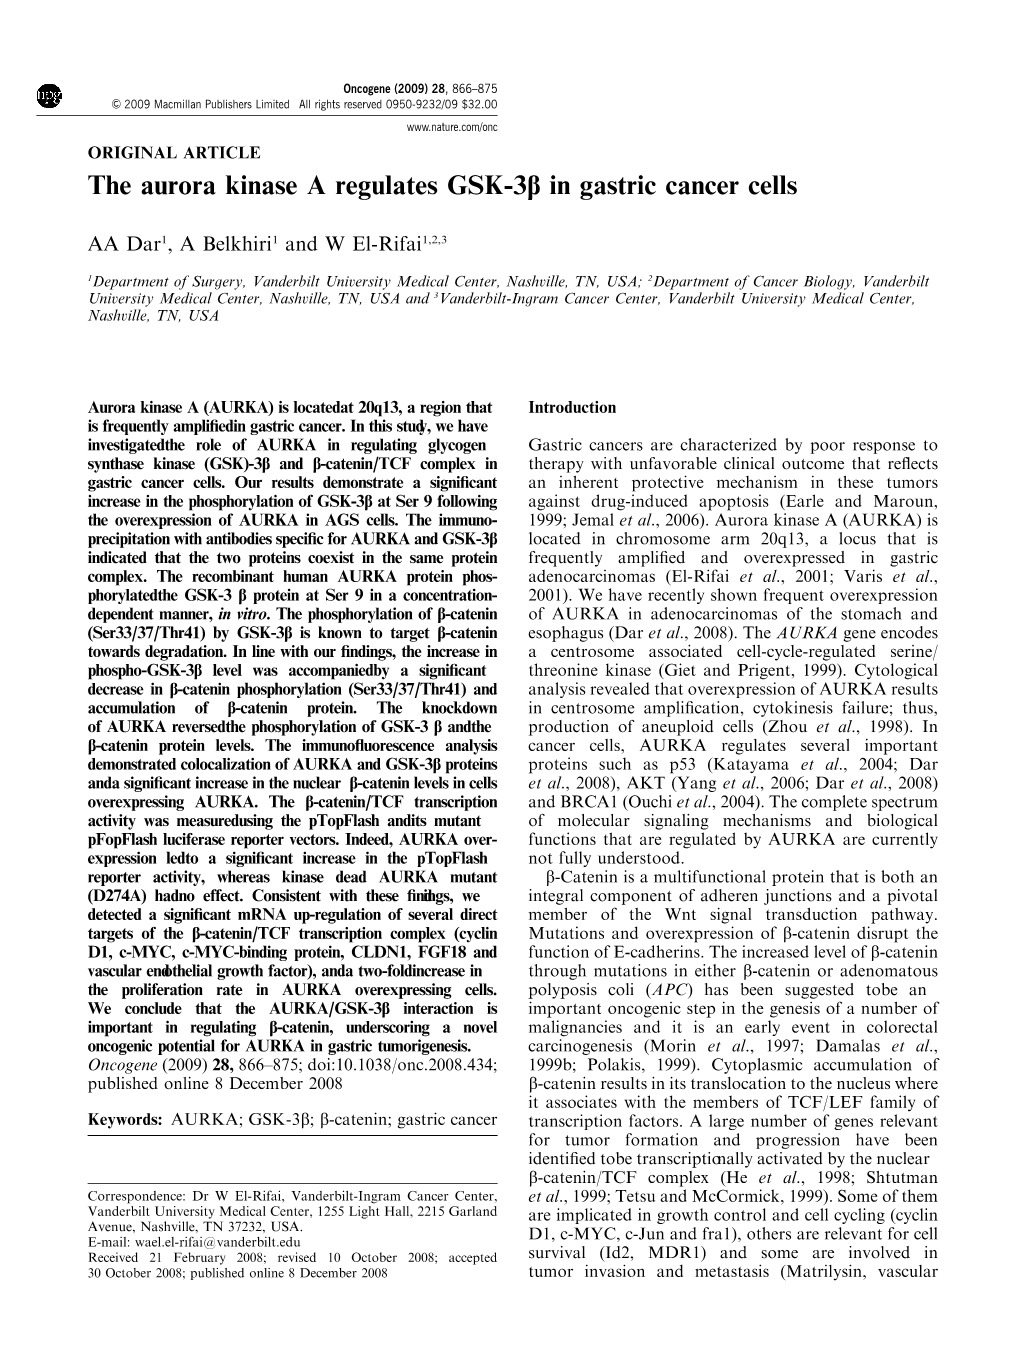 The Aurora Kinase a Regulates GSK-3B in Gastric Cancer Cells